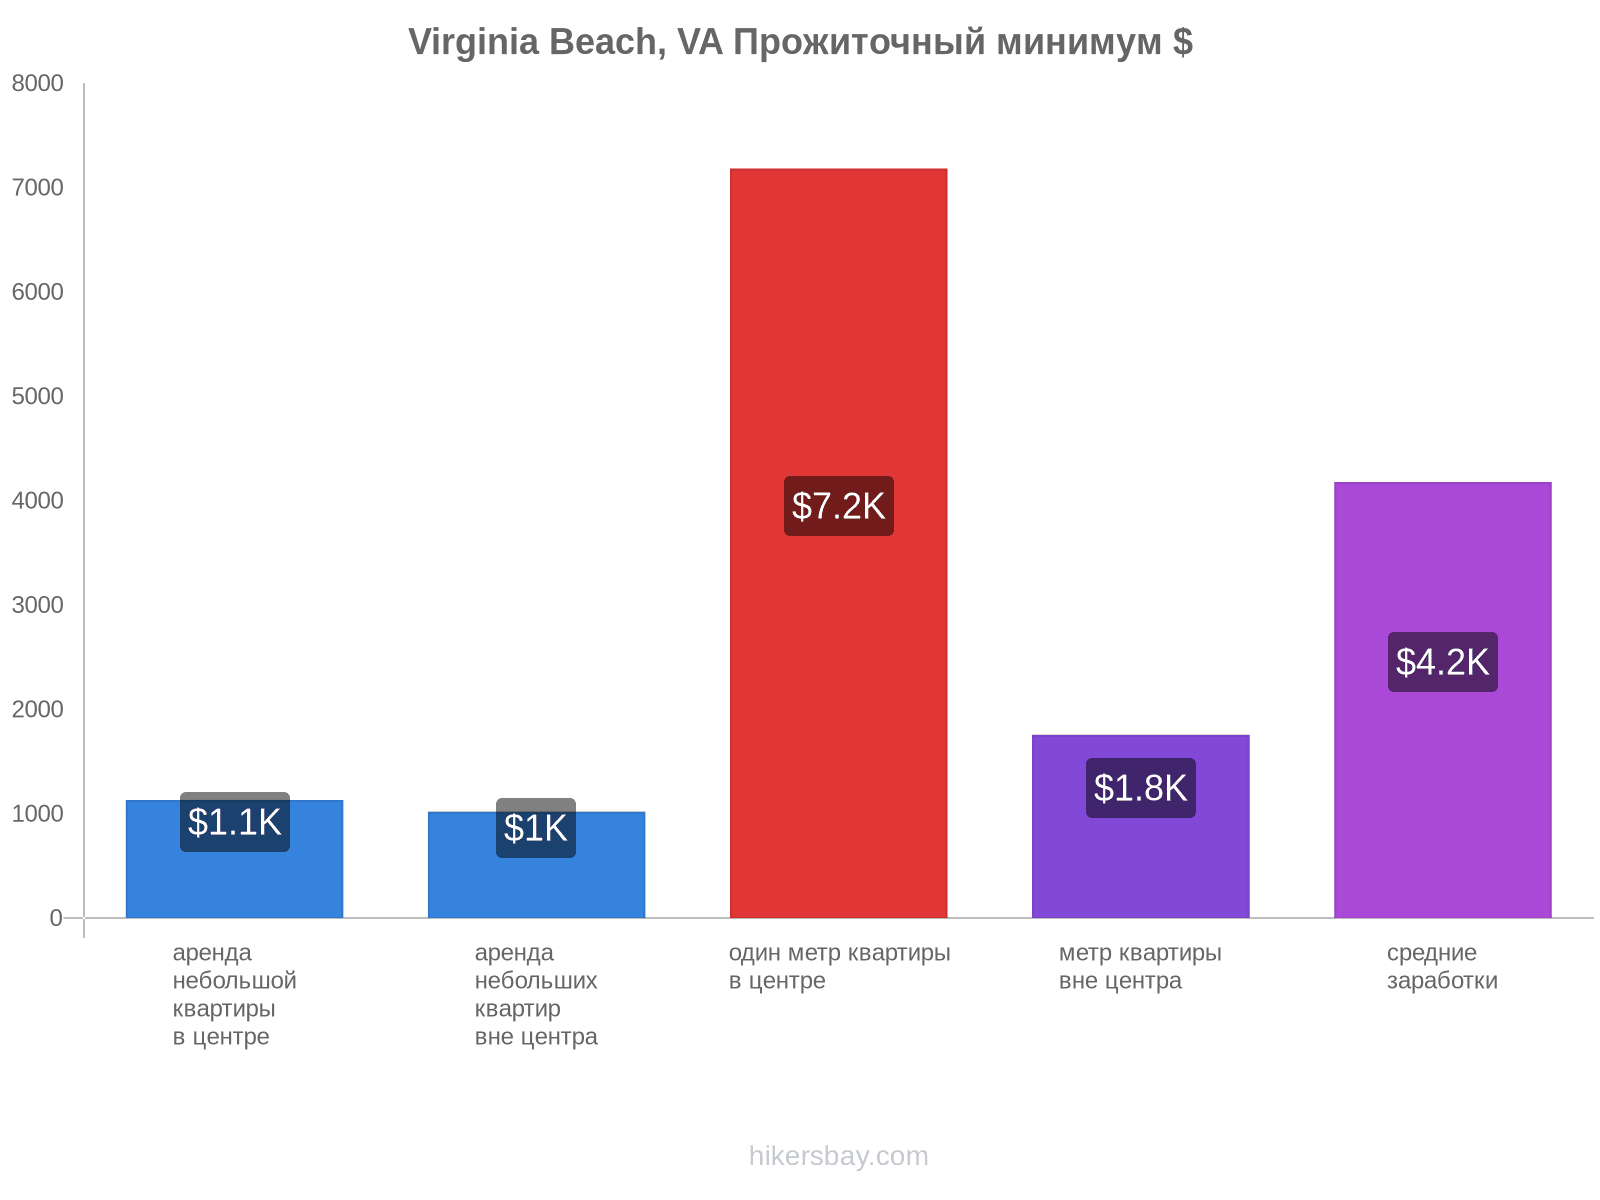 Virginia Beach, VA стоимость жизни hikersbay.com